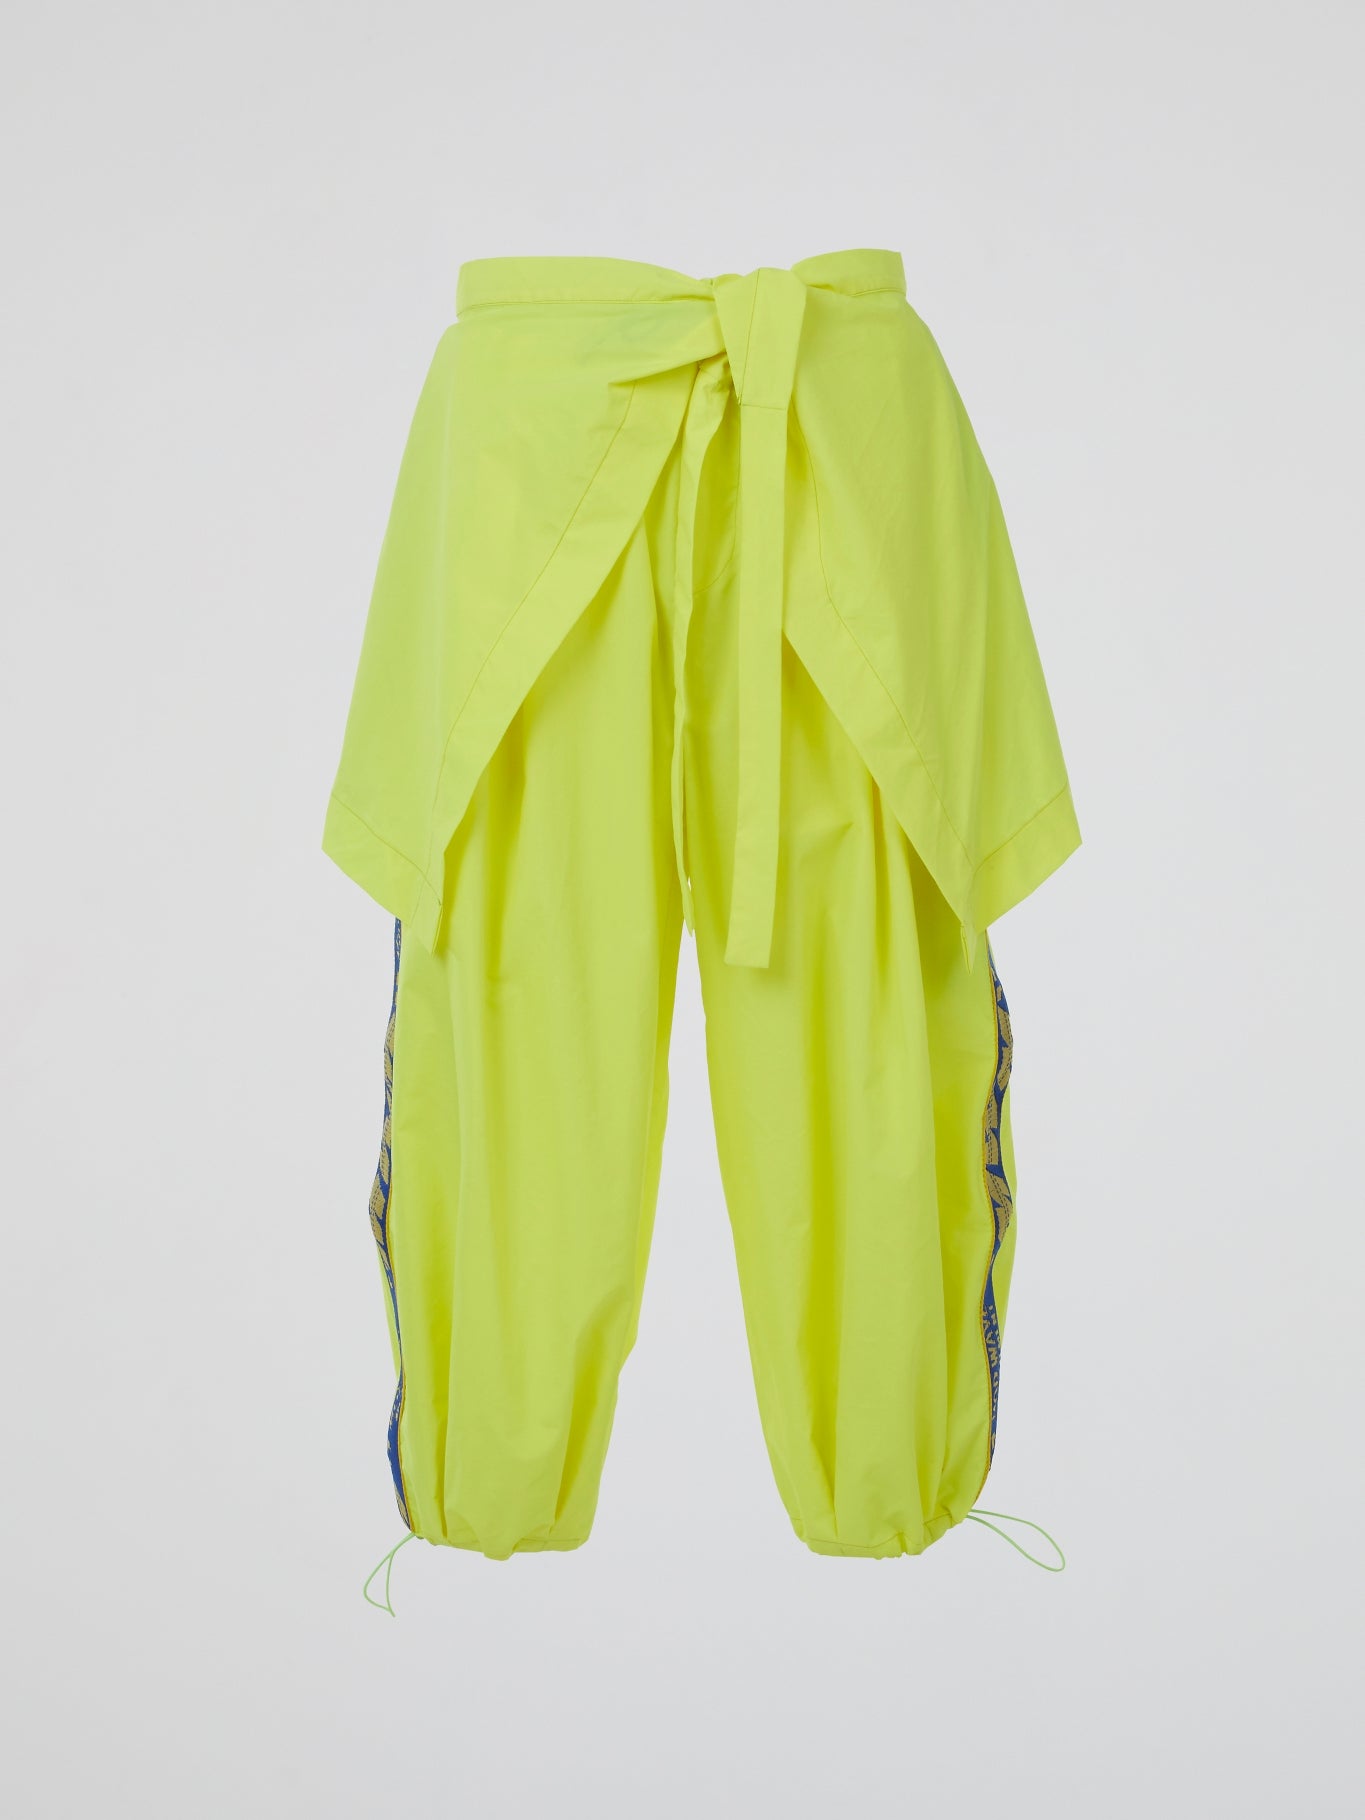 Yellow Overlay Drawstring Pants